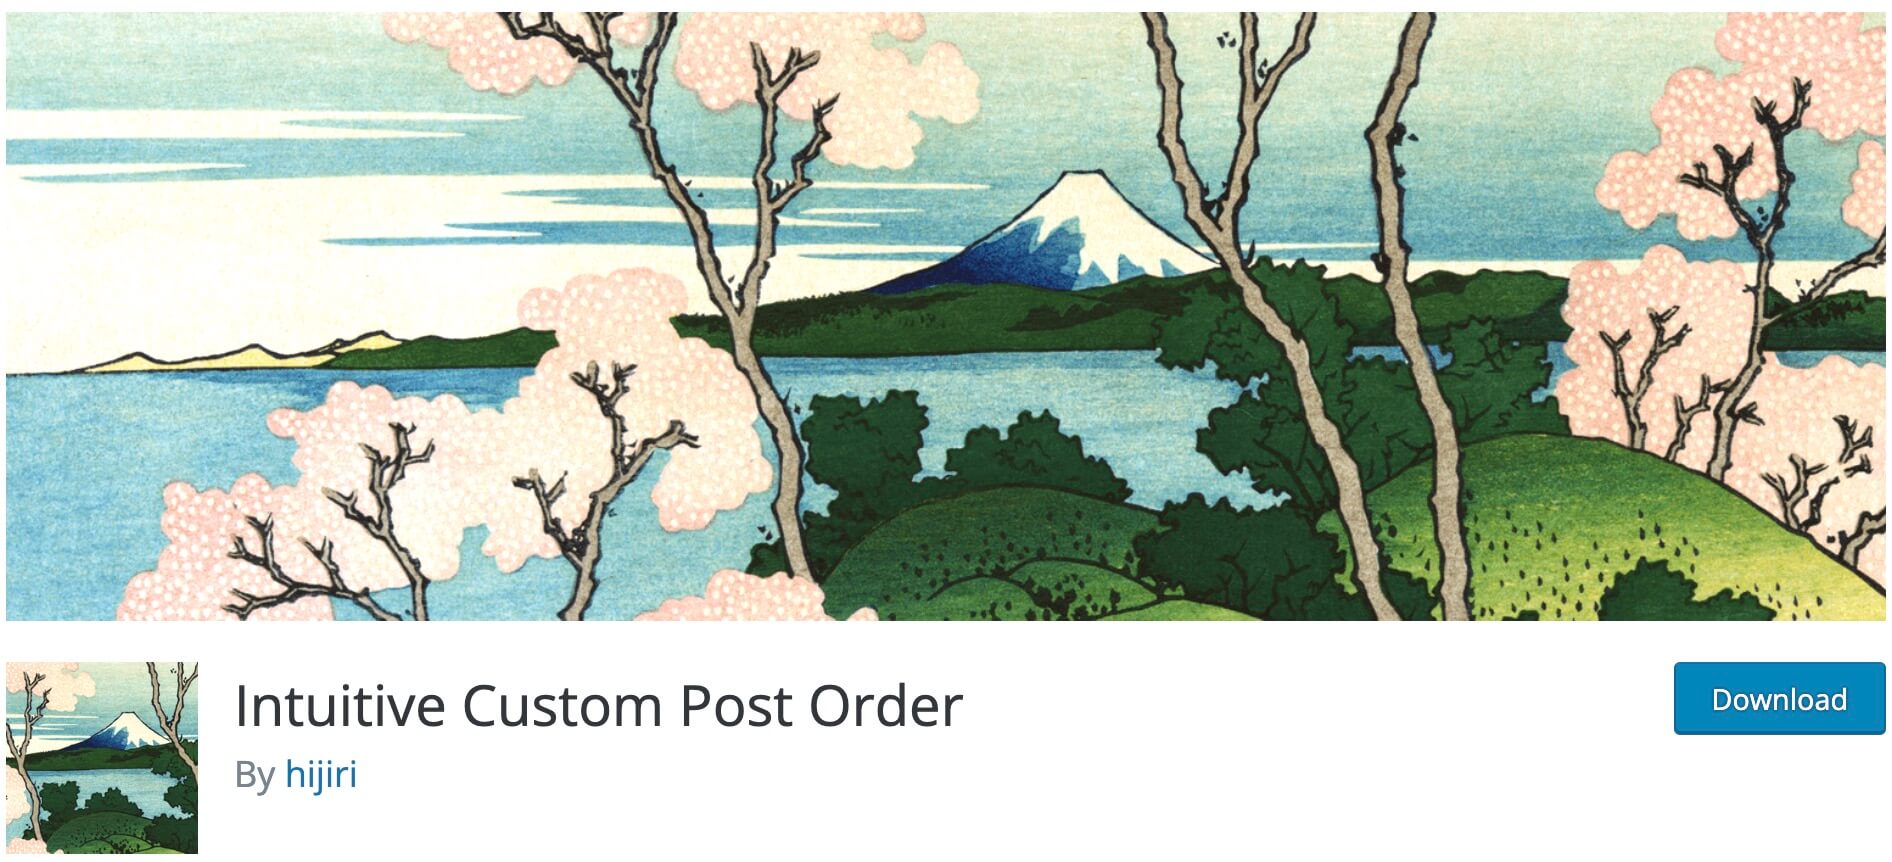 Intuitive Custom Post Order